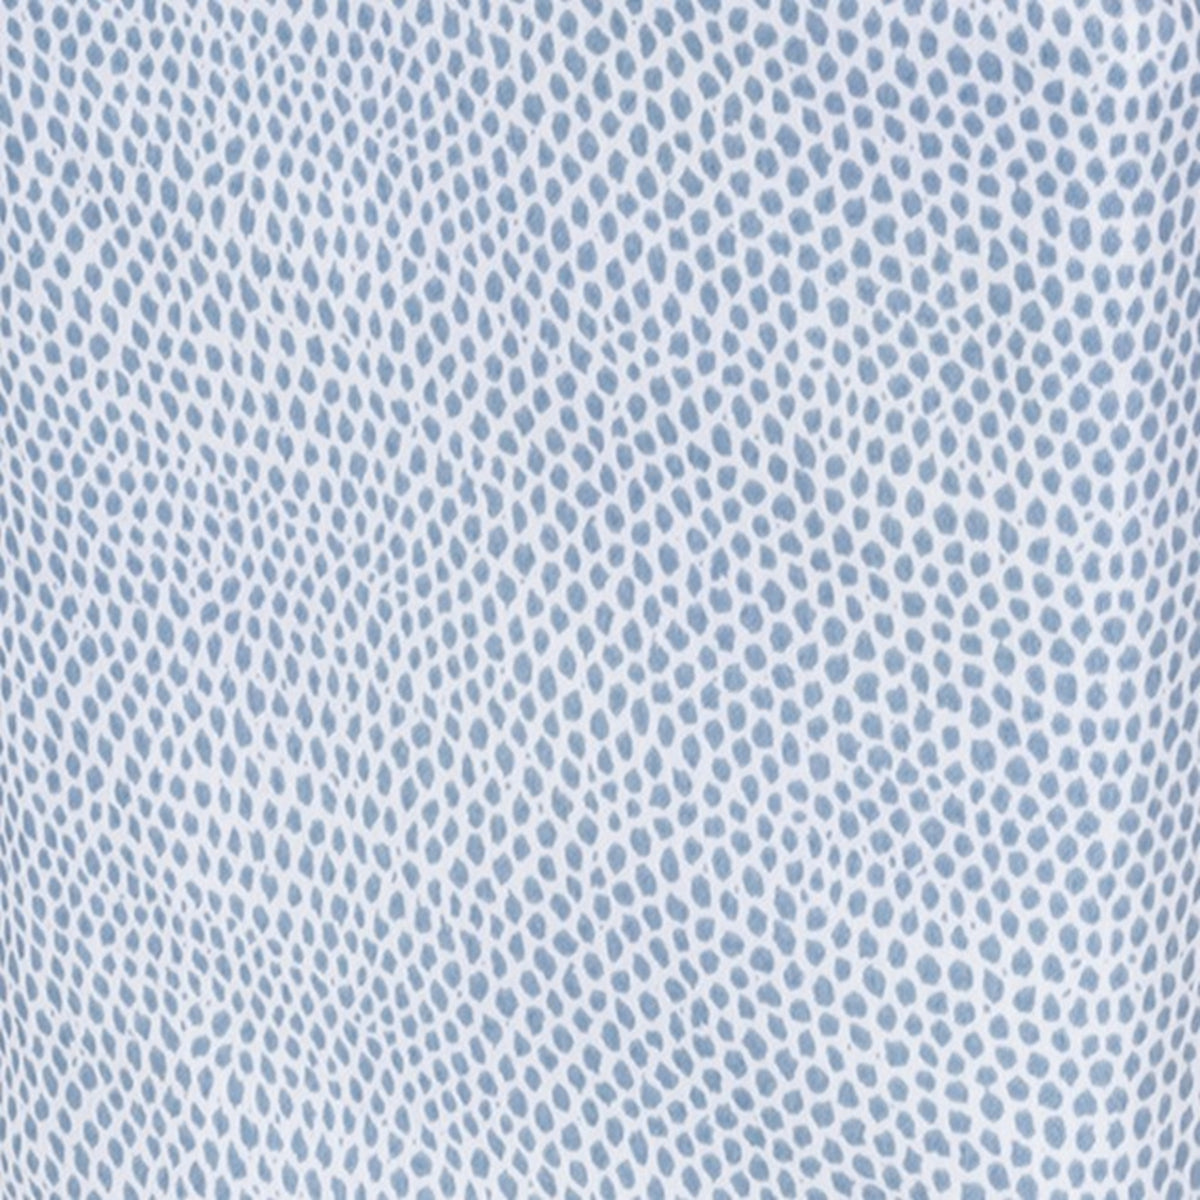 Swatch Sample of Matouk Jasper Tissue Box Cover in Hazy Blue Color